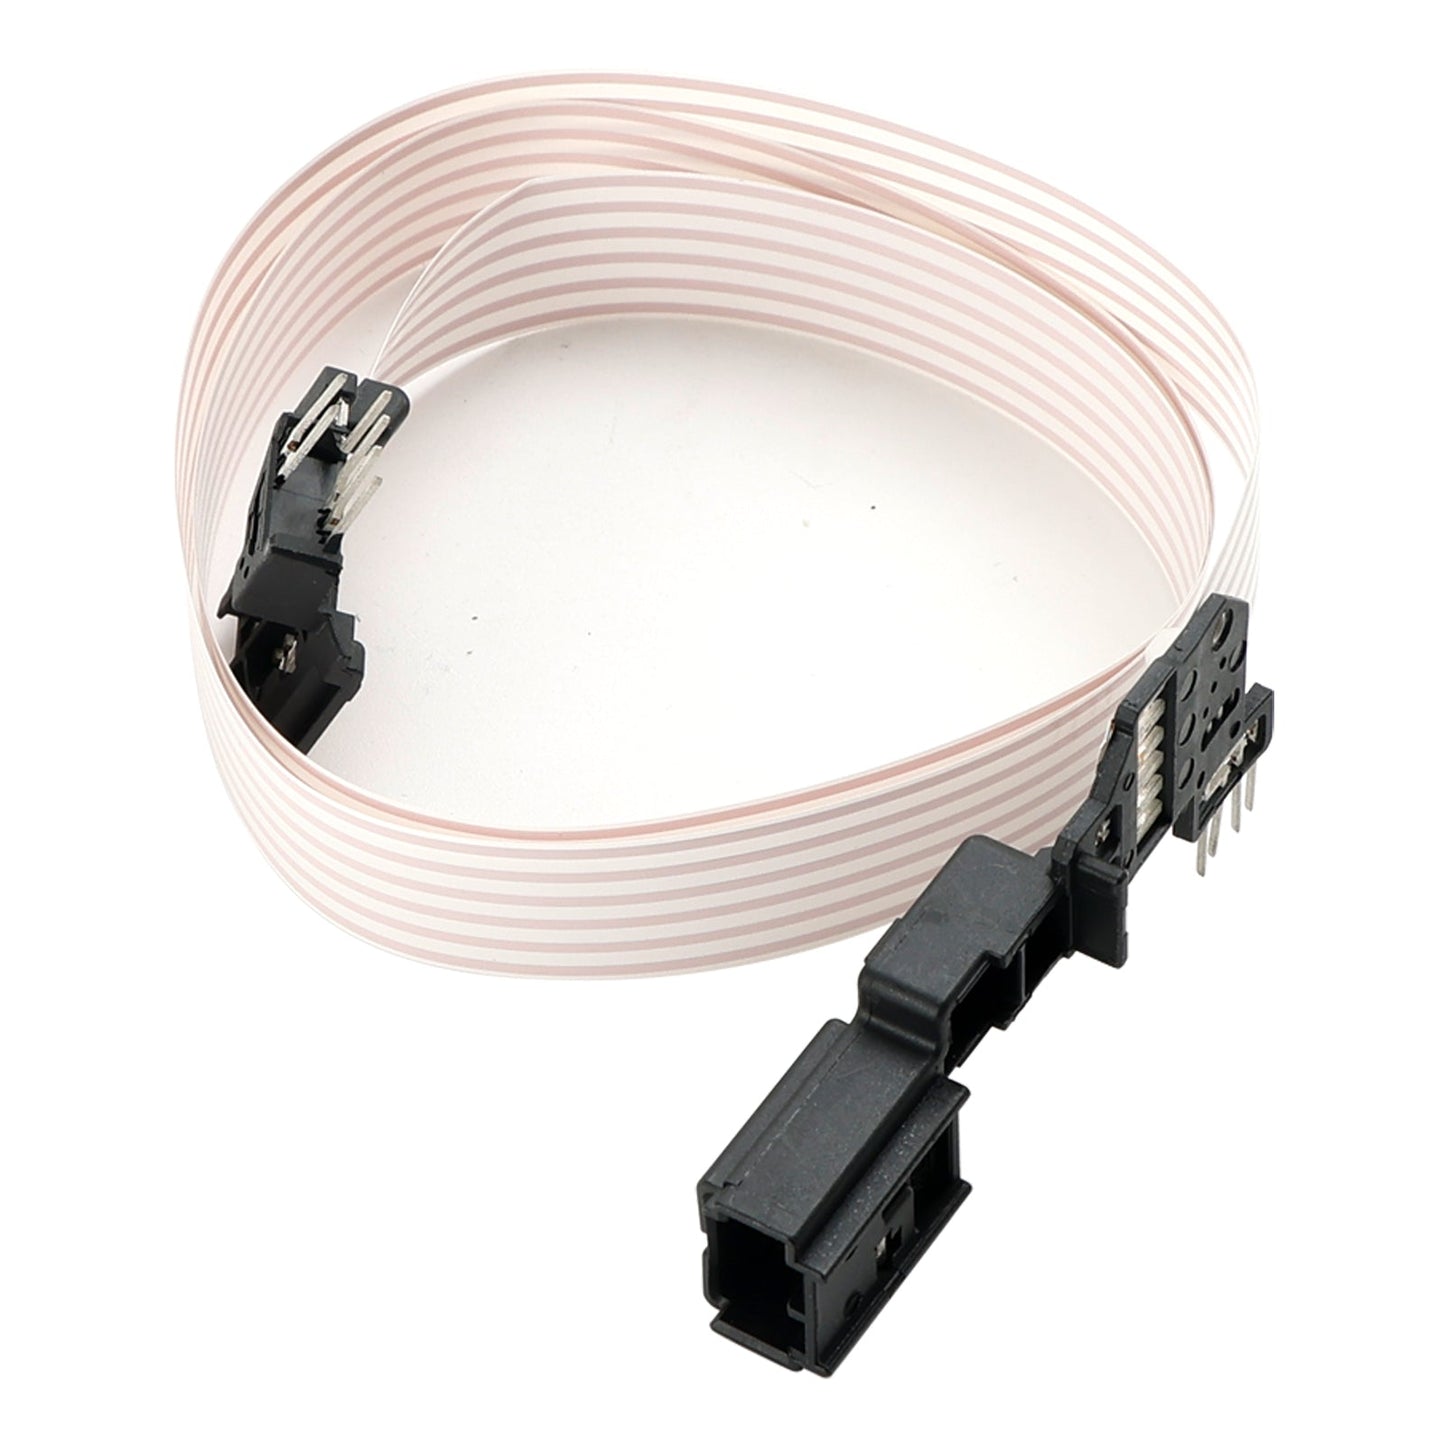 Octavia Superb Yeti Airbag FFC Ribbon Cable 5K0953569 5K0953569AL